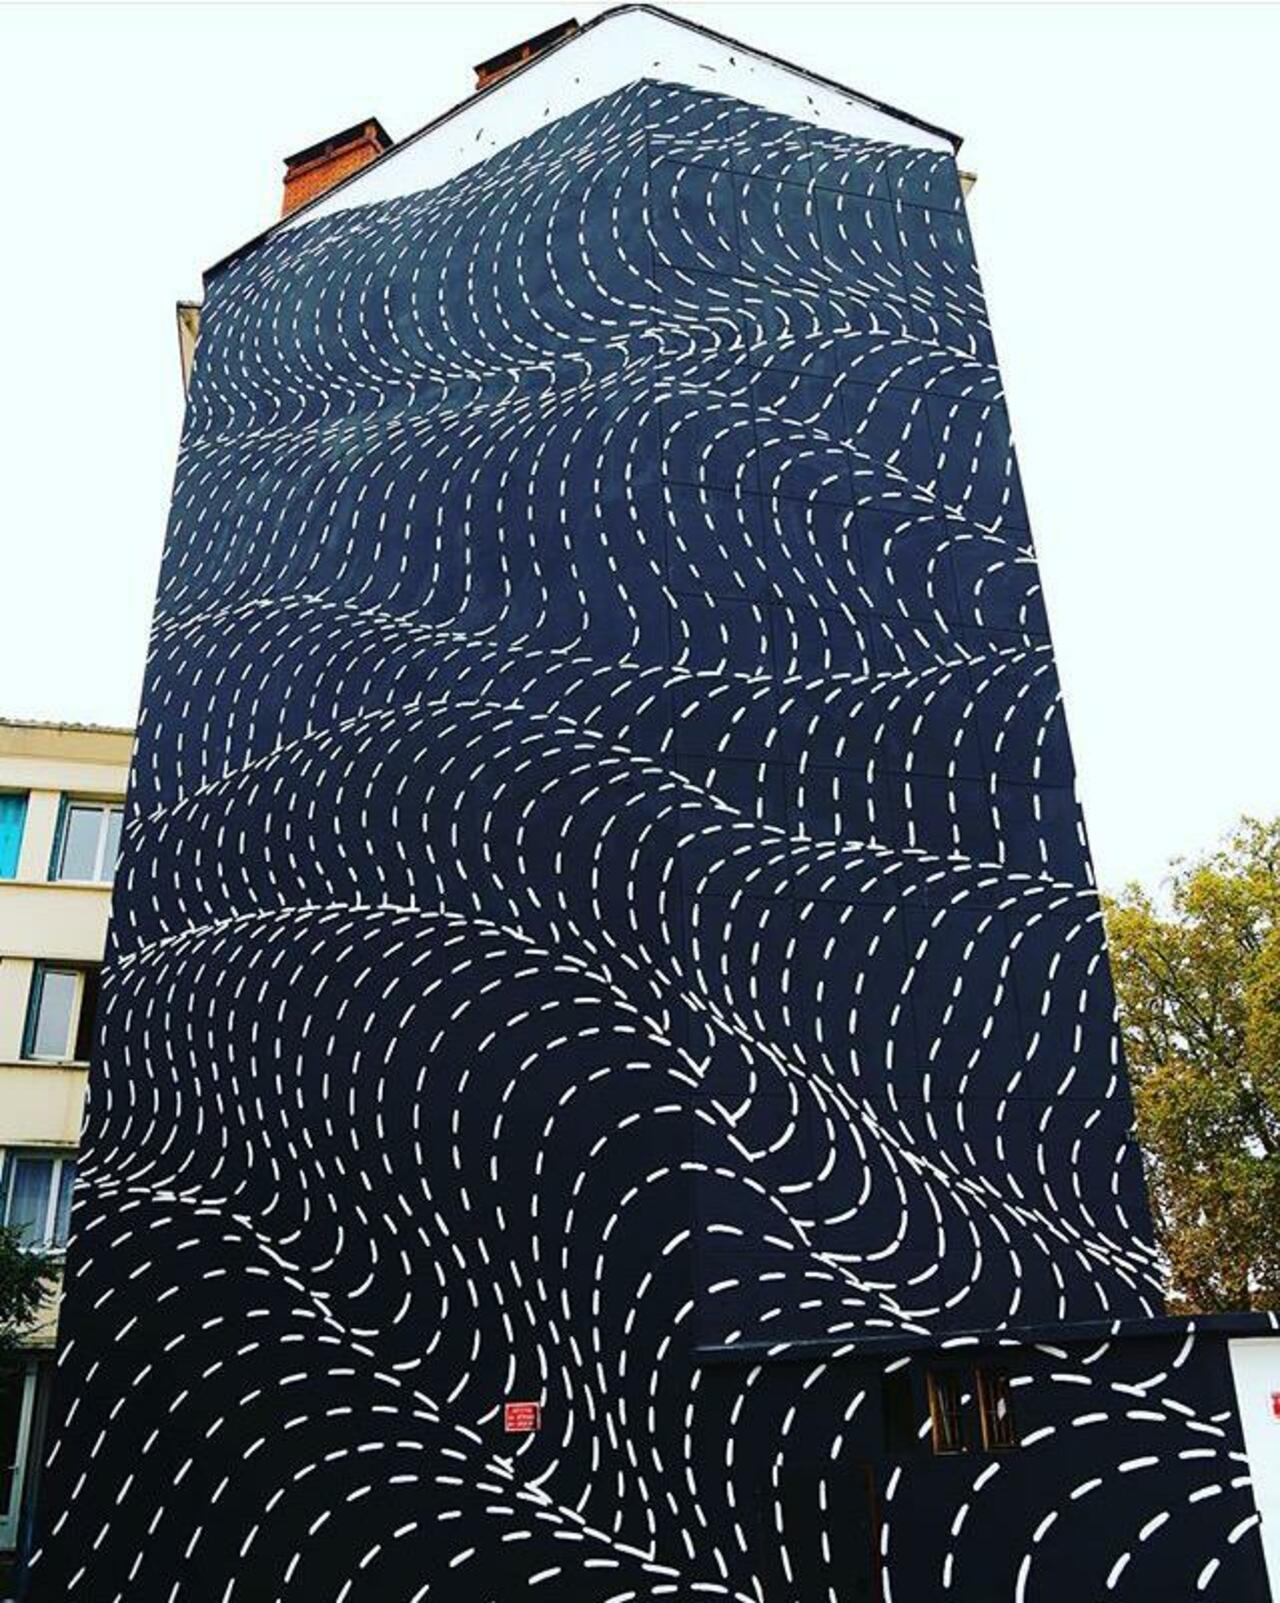 New Street Art by Brendan Monroe's for WOPS ! Festival in Toulouse, France. 

#art #graffiti #mural #streetart https://t.co/XGheM5QaL2